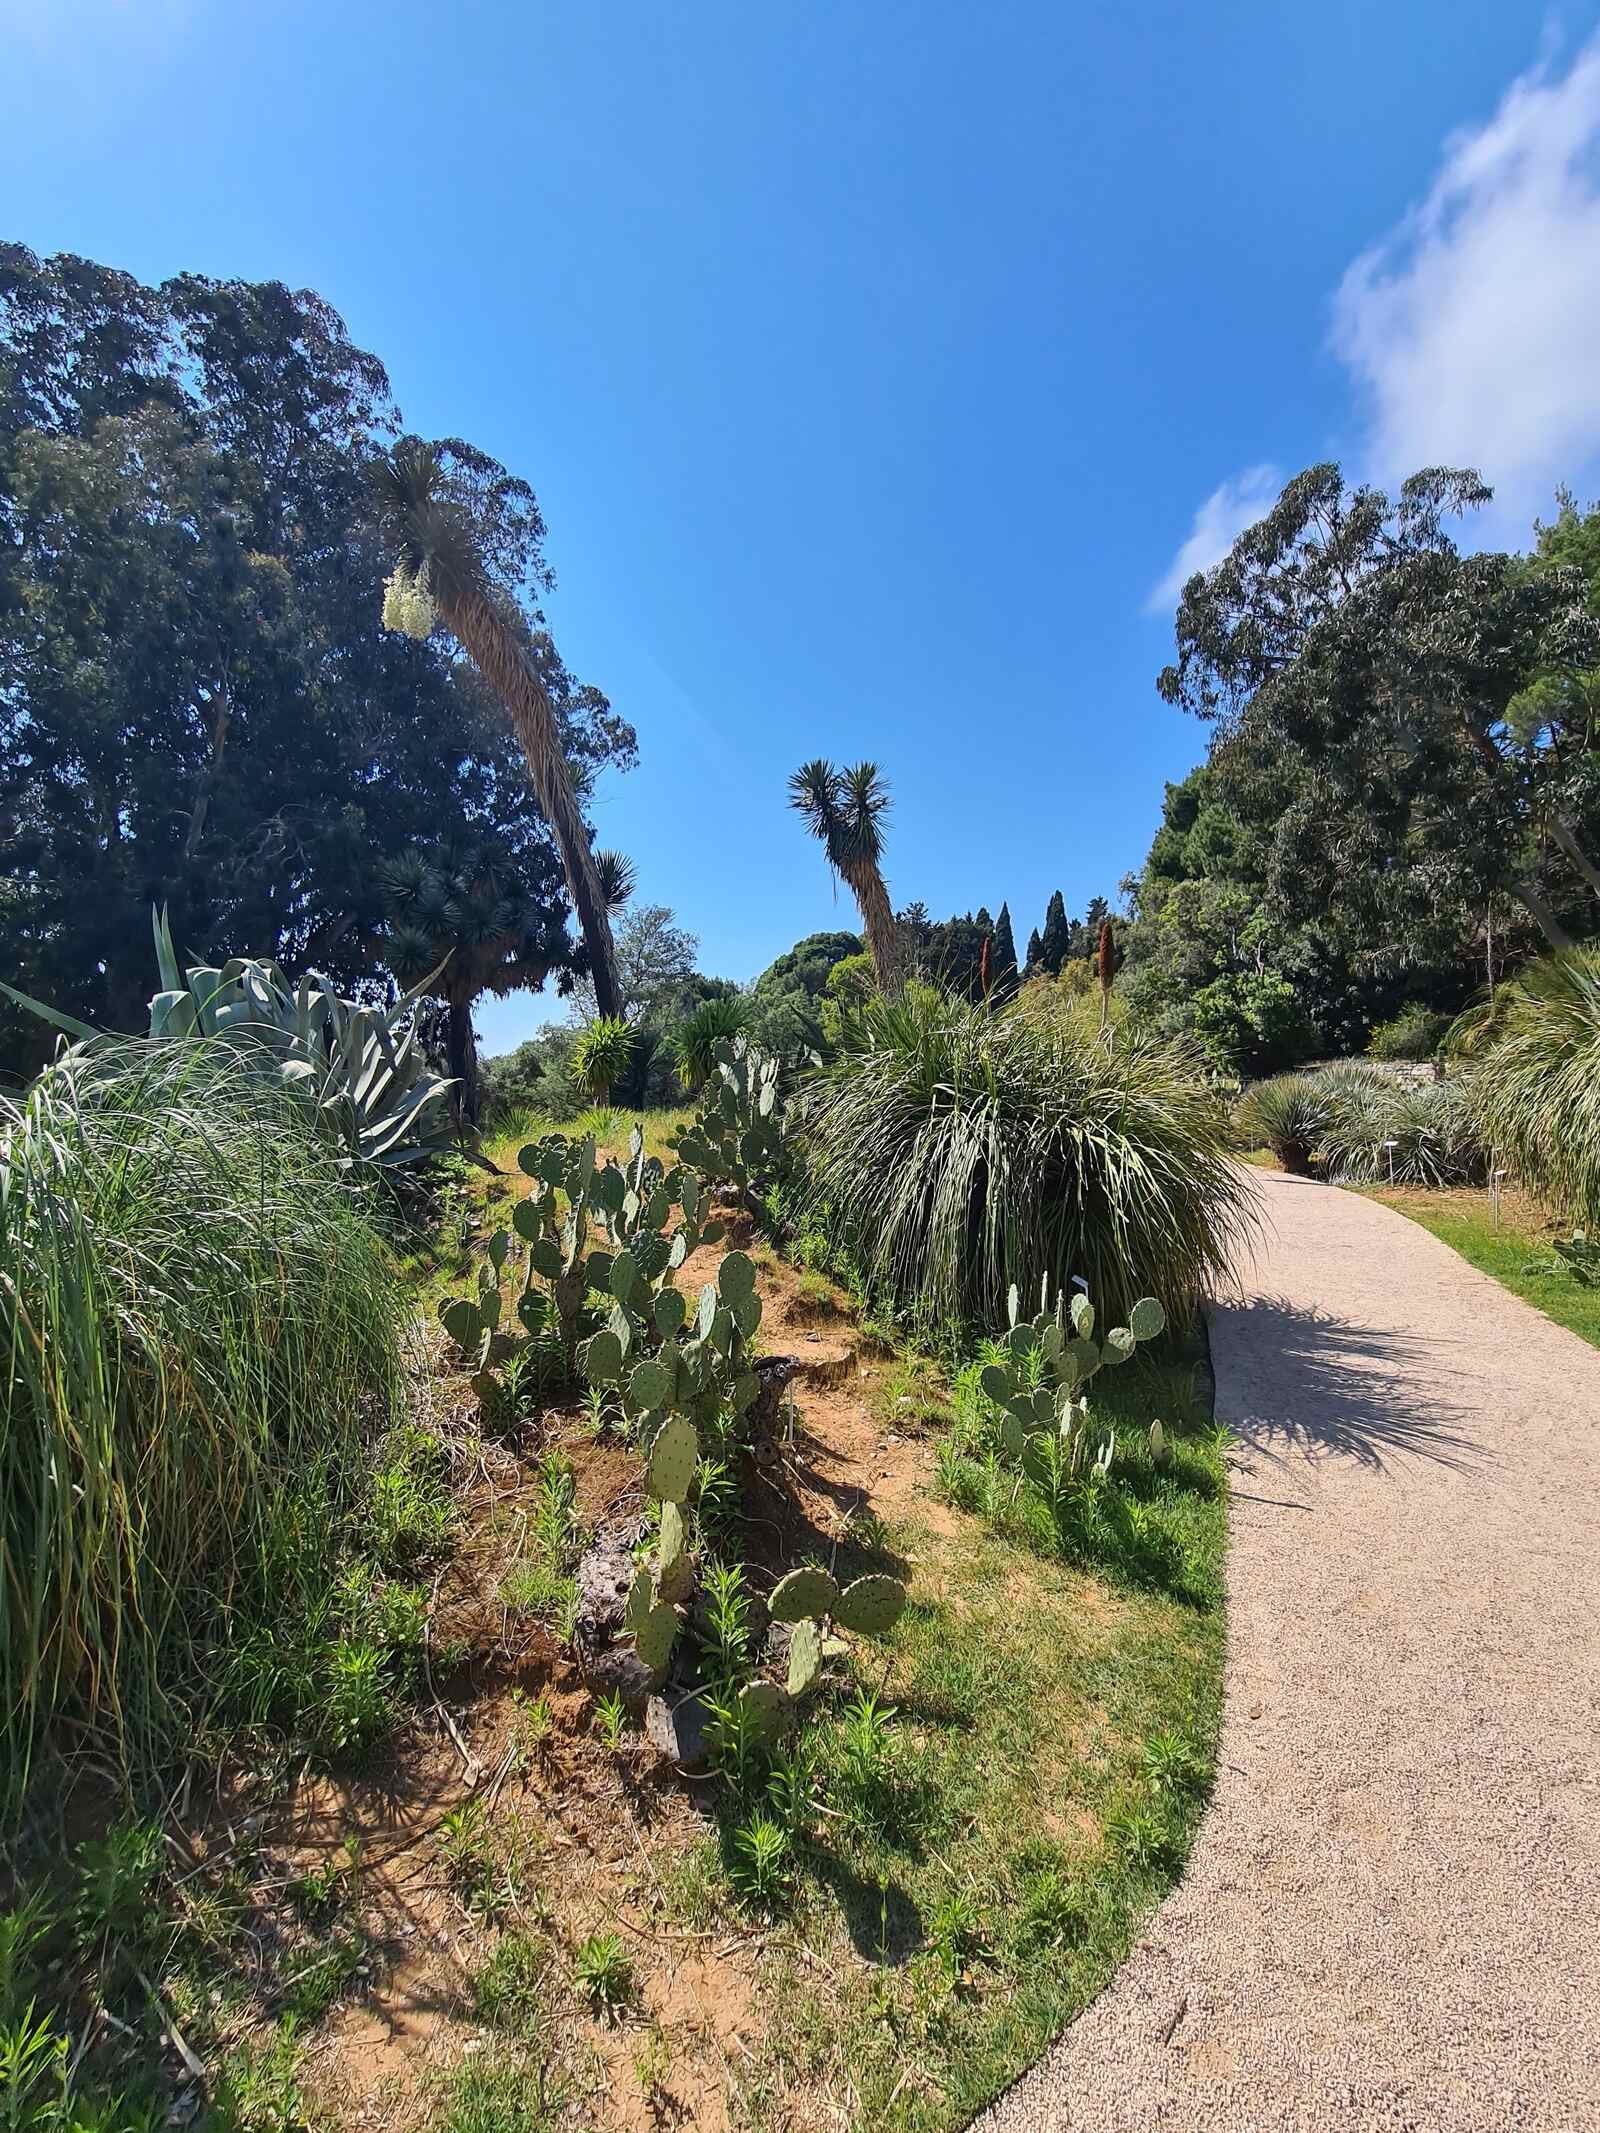 lokrum island botanical gardens